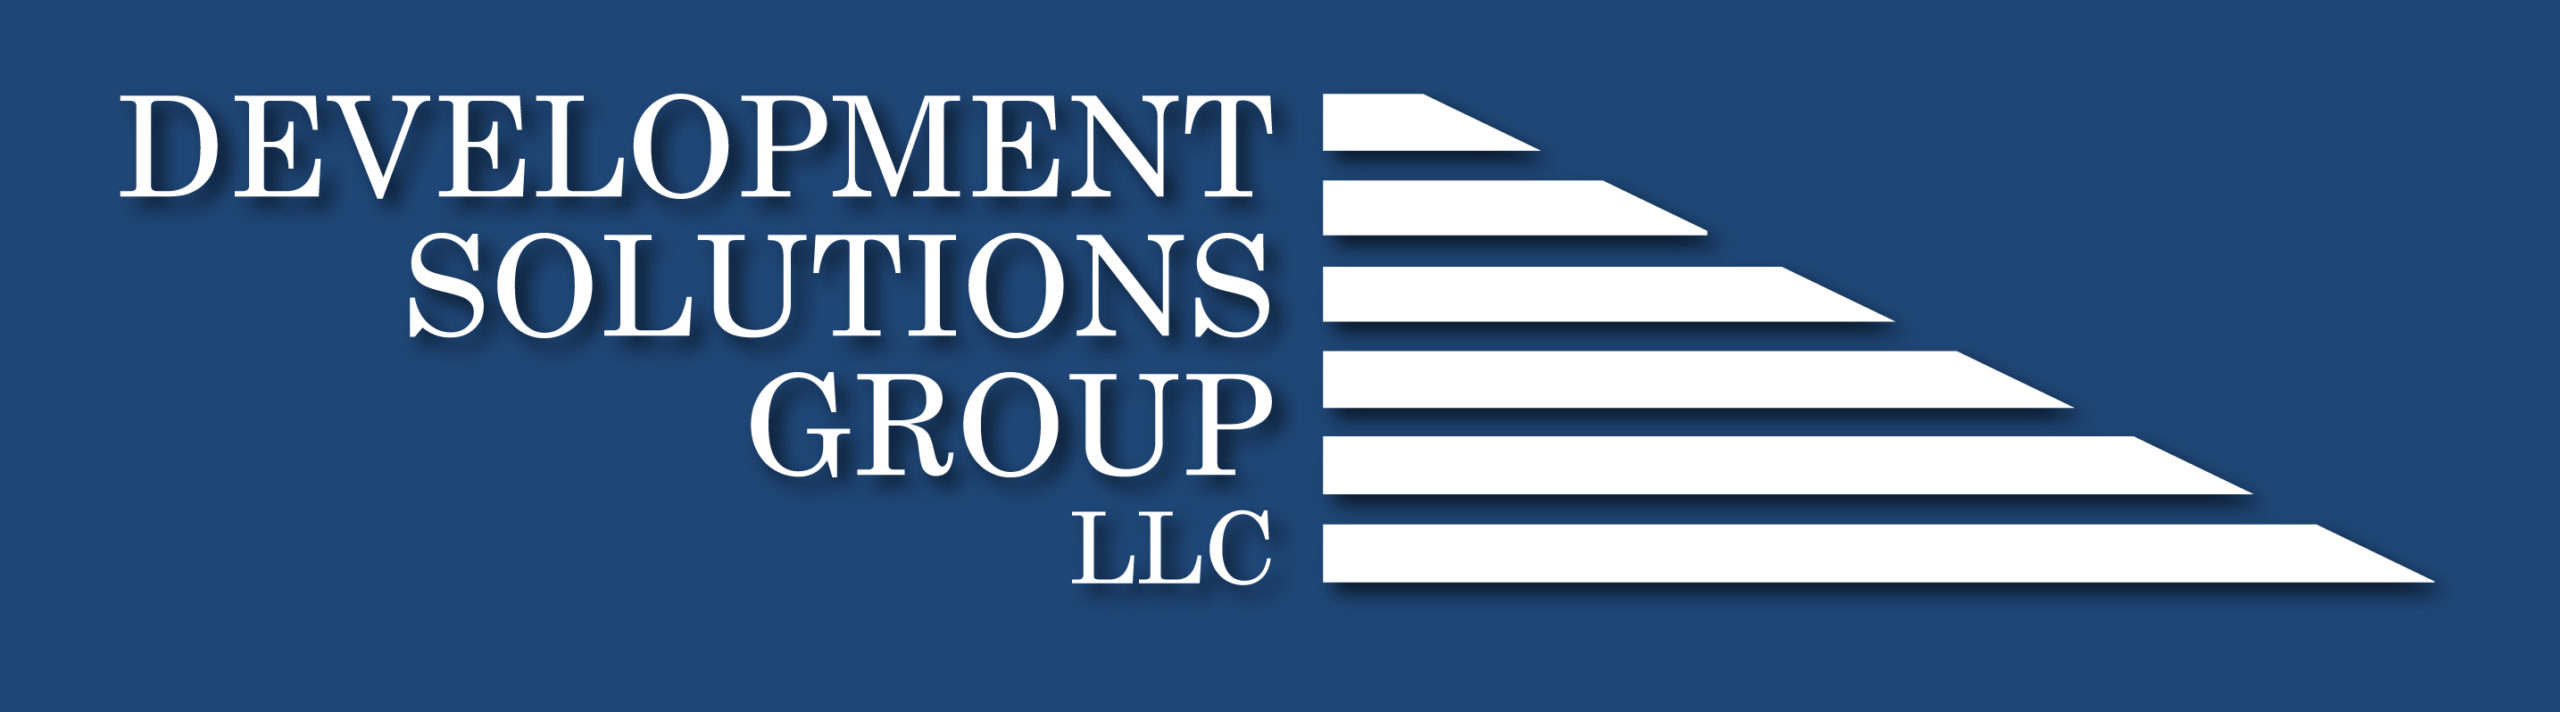 Development Solutions Group, LLC